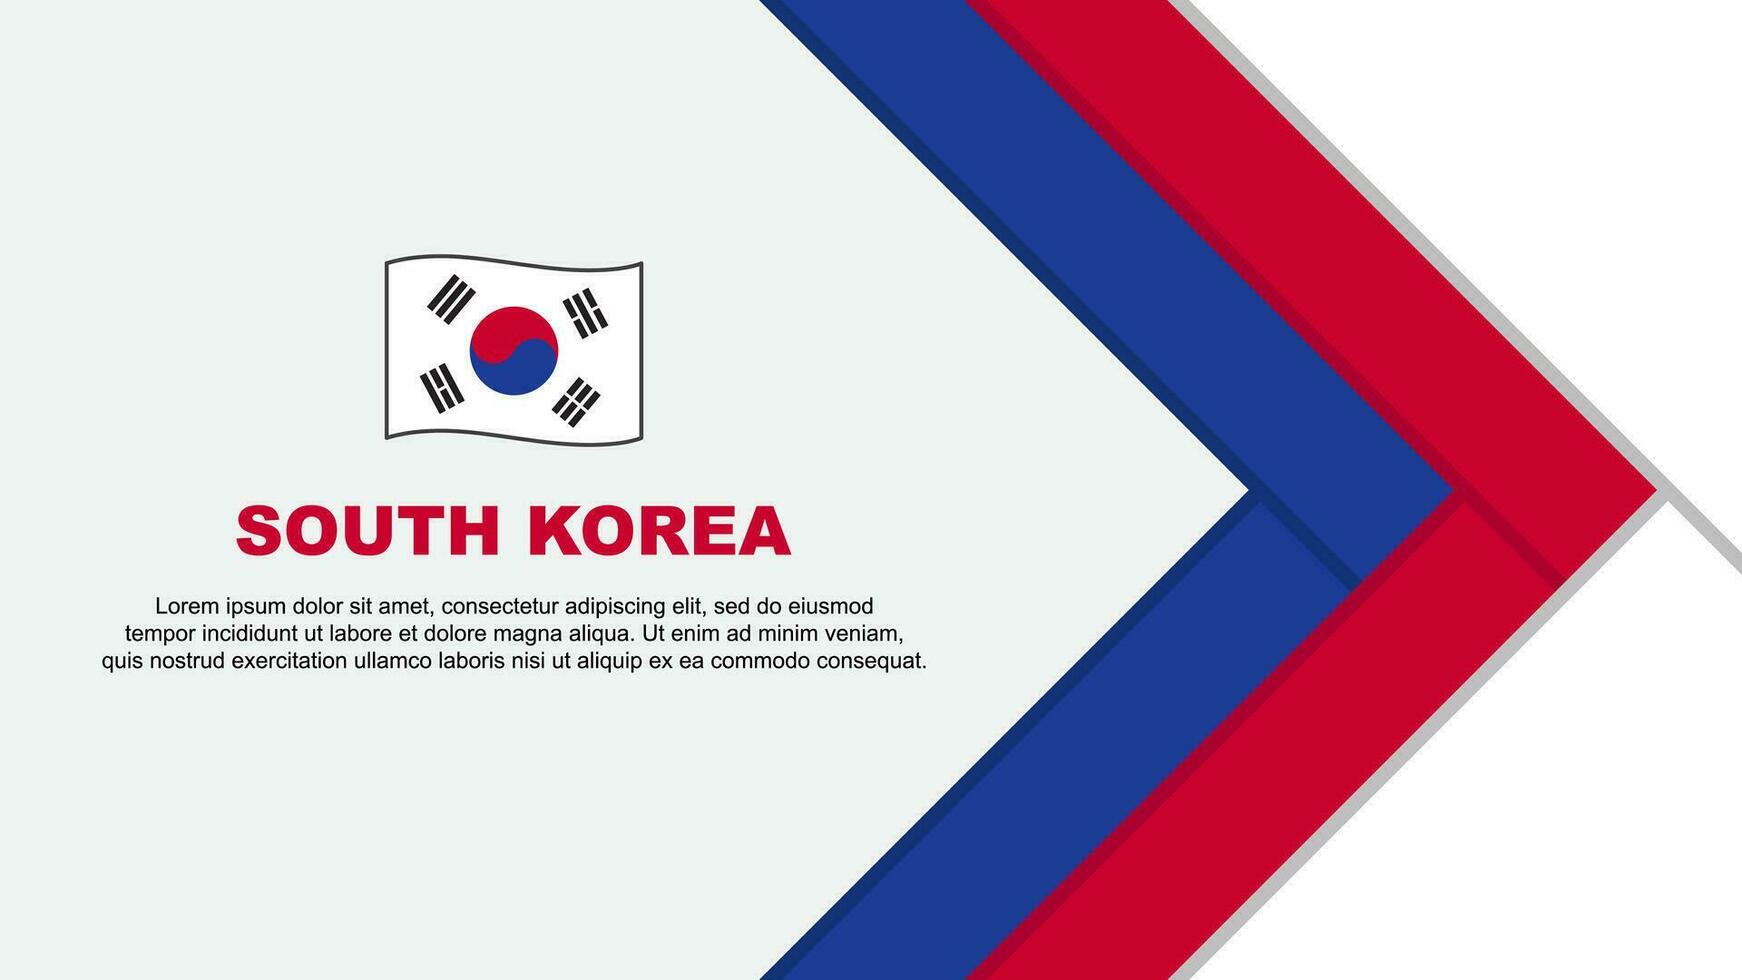 South Korea Flag Abstract Background Design Template. South Korea Independence Day Banner Cartoon Vector Illustration. South Korea Cartoon